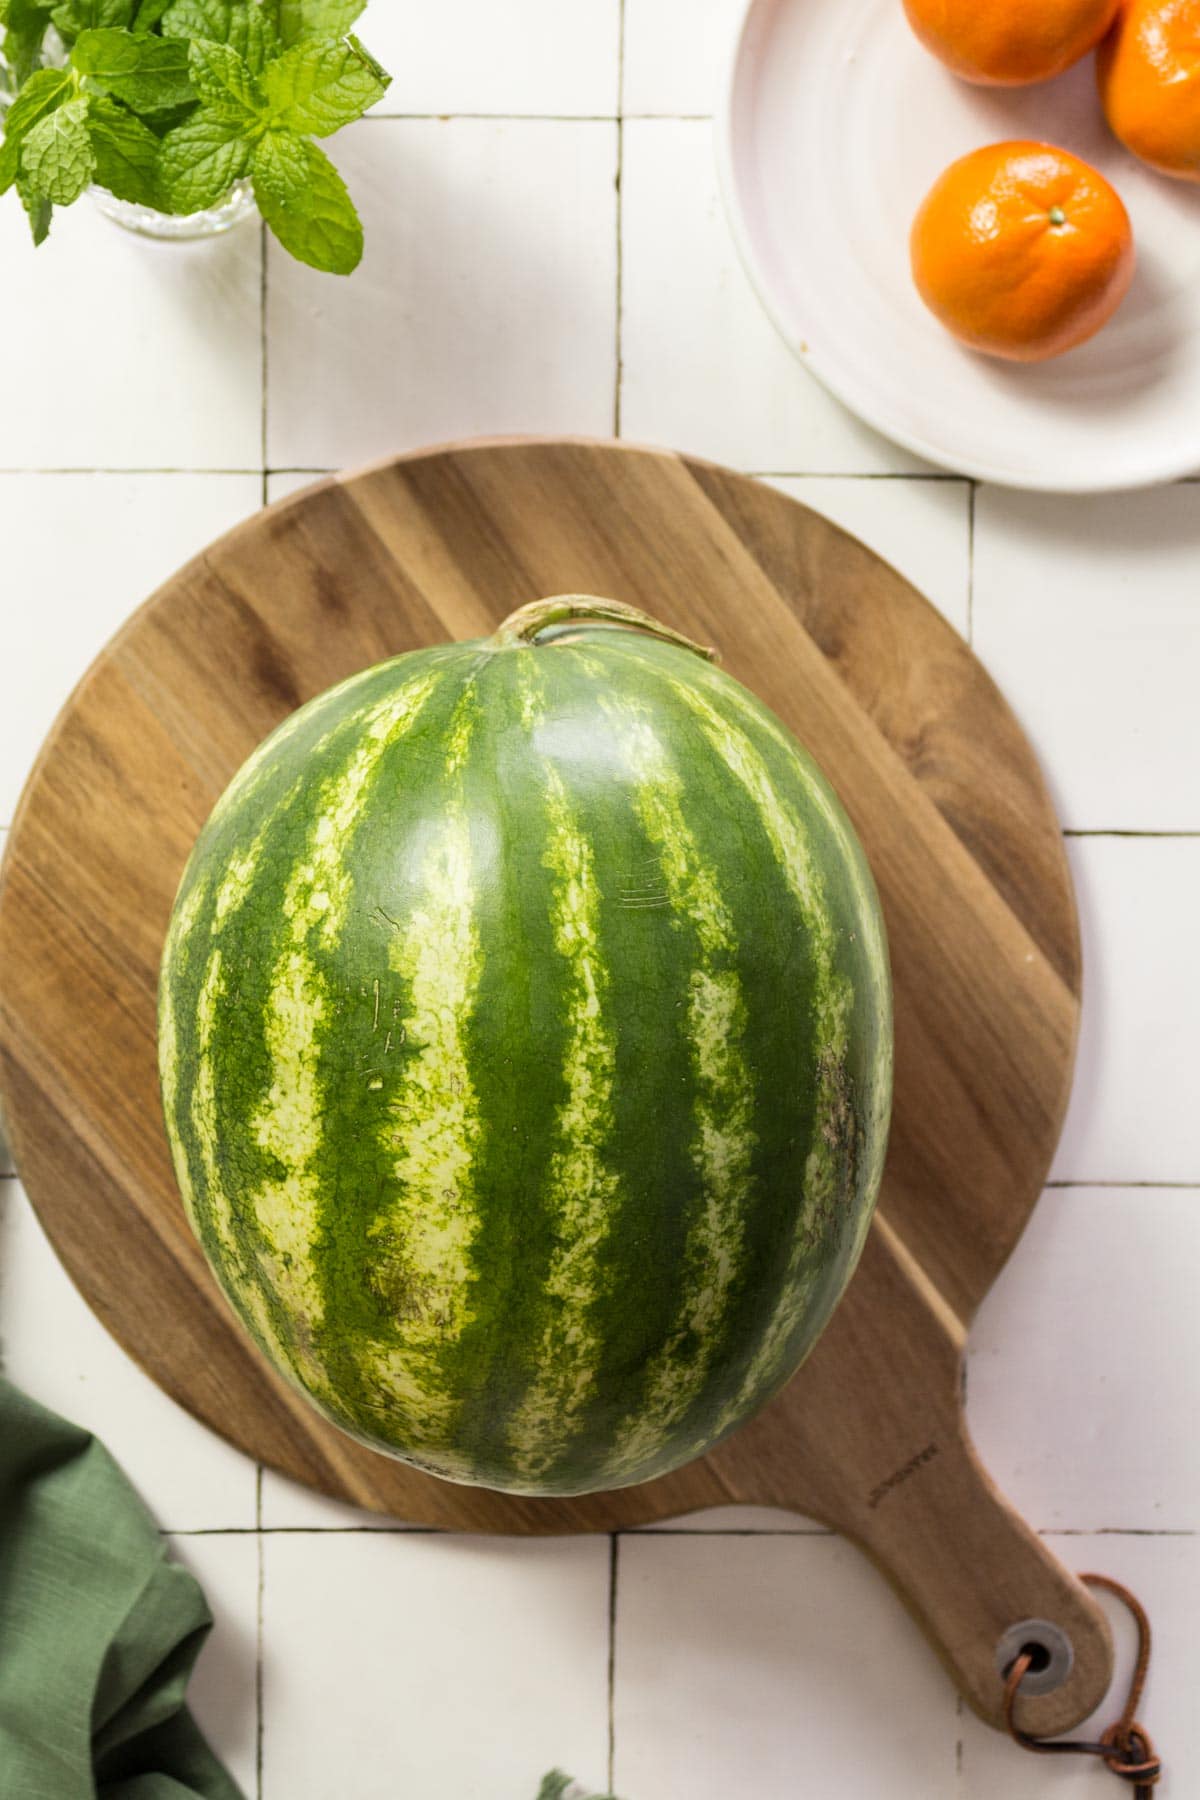 Whole watermelon on a wooden board